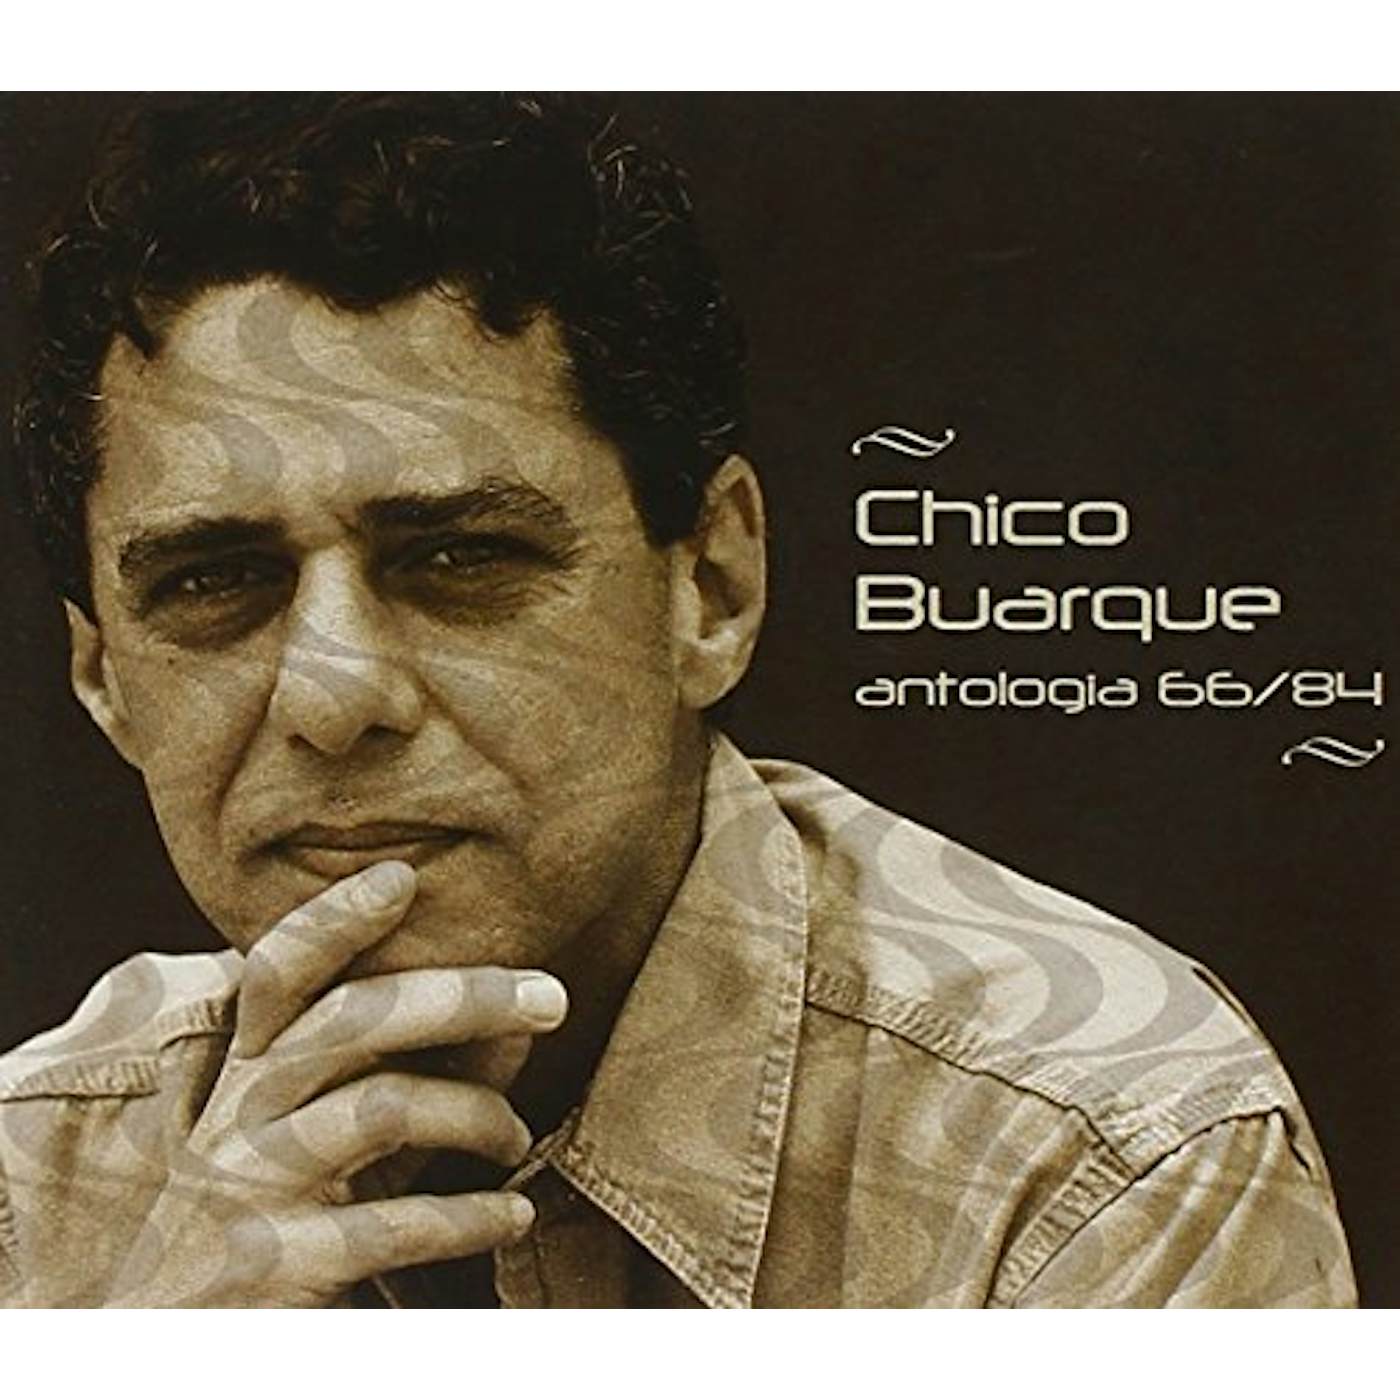 Chico Buarque ANTOLOGIA 66 - 84 CD